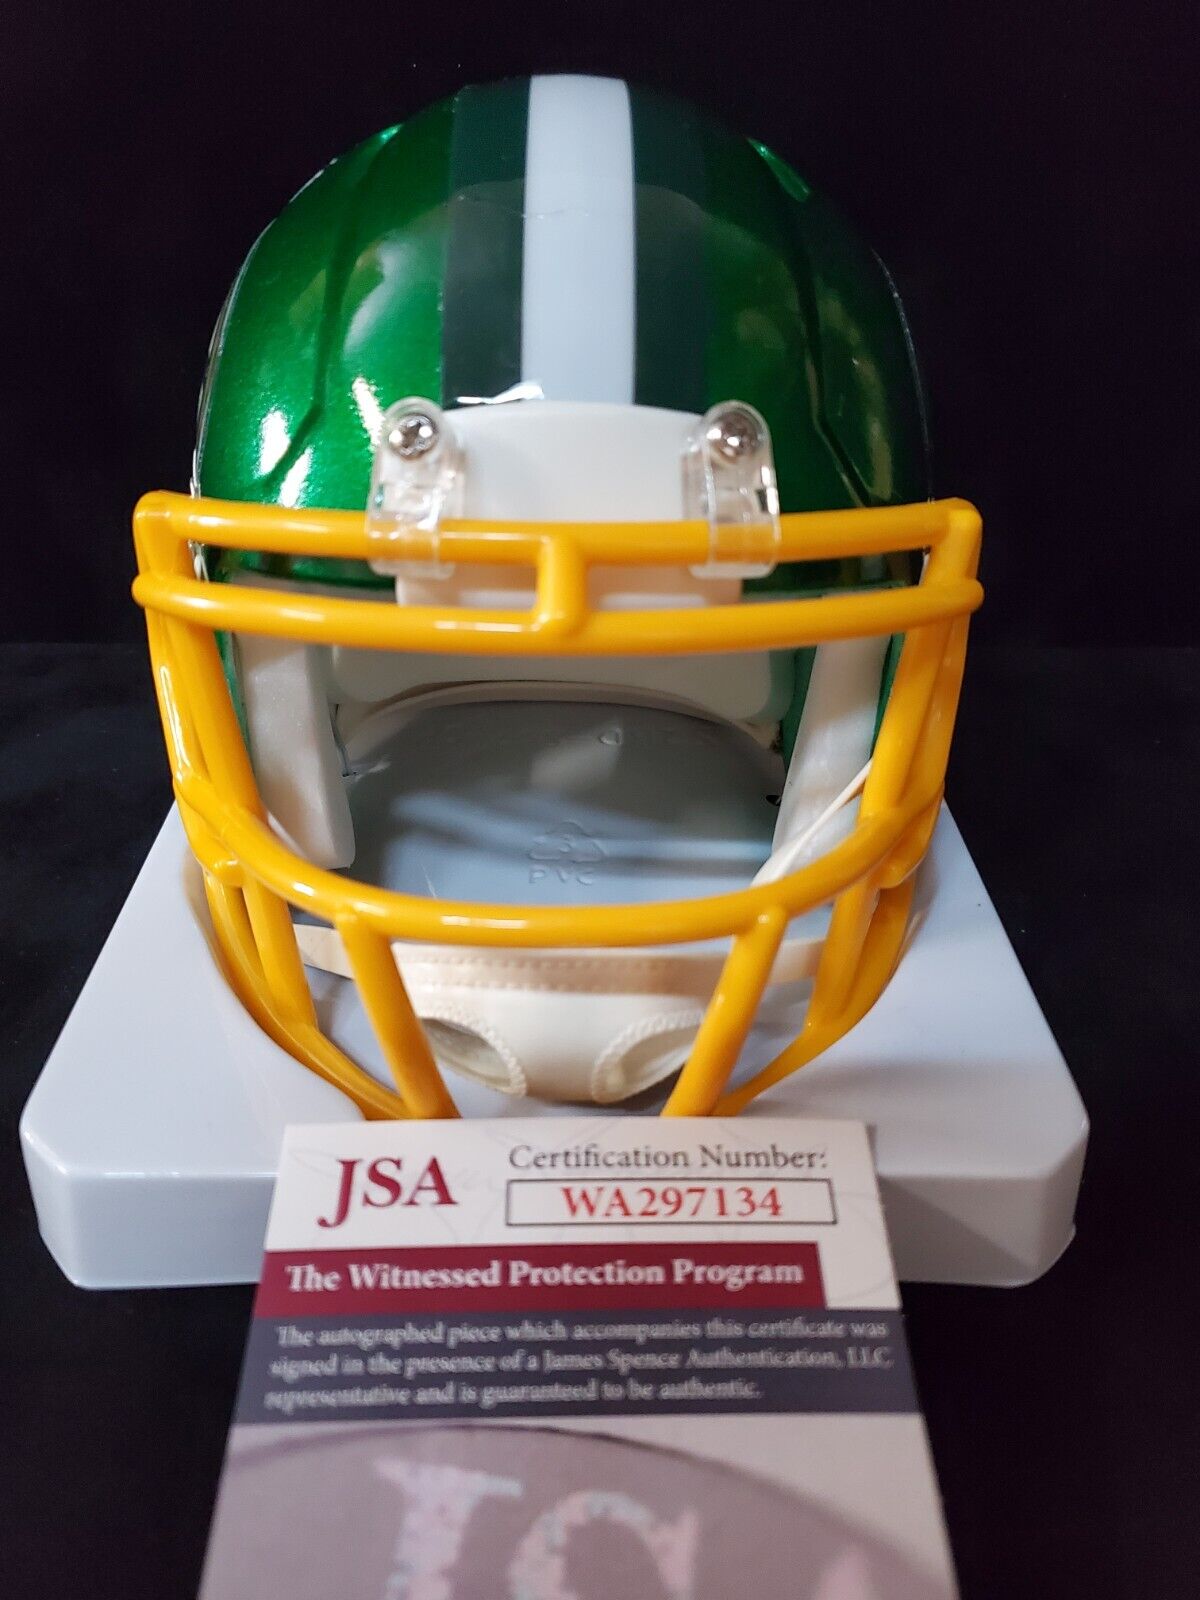 MVP Authentics Green Bay Packers Randall Cobb Autographed Signed Flash Mini Helmet Jsa Coa 117 sports jersey framing , jersey framing